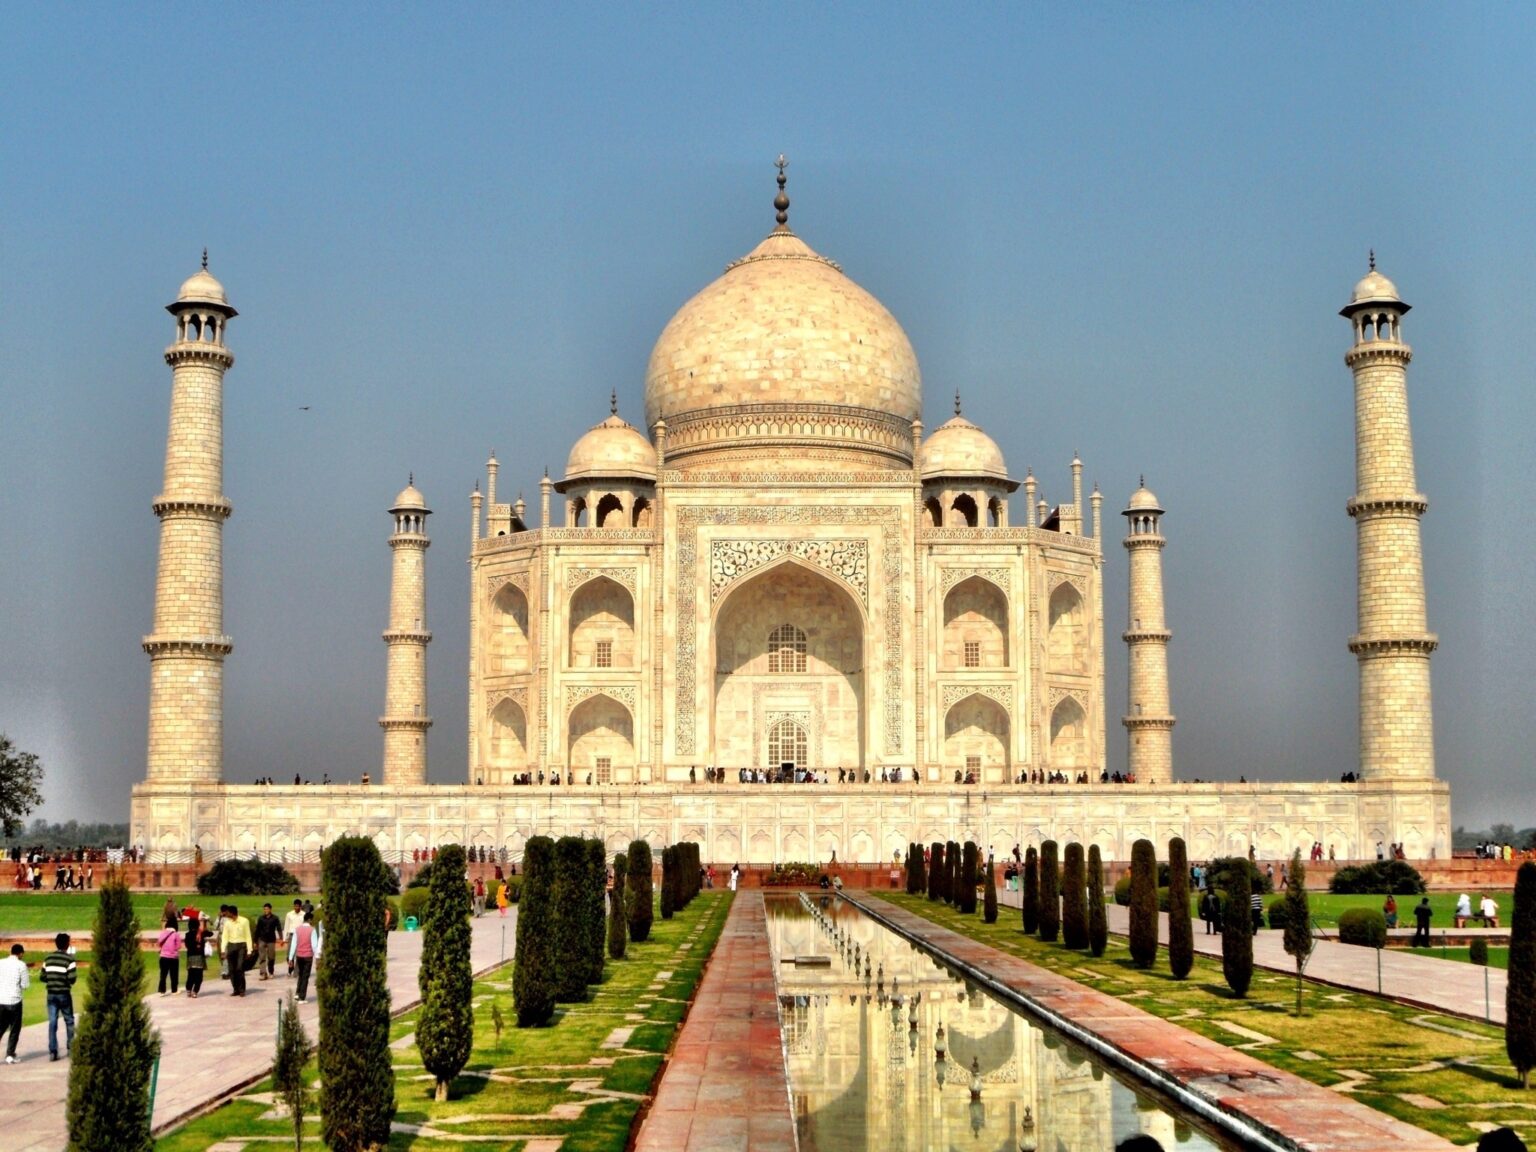 Ewige Schönheit! das Taj Mahal